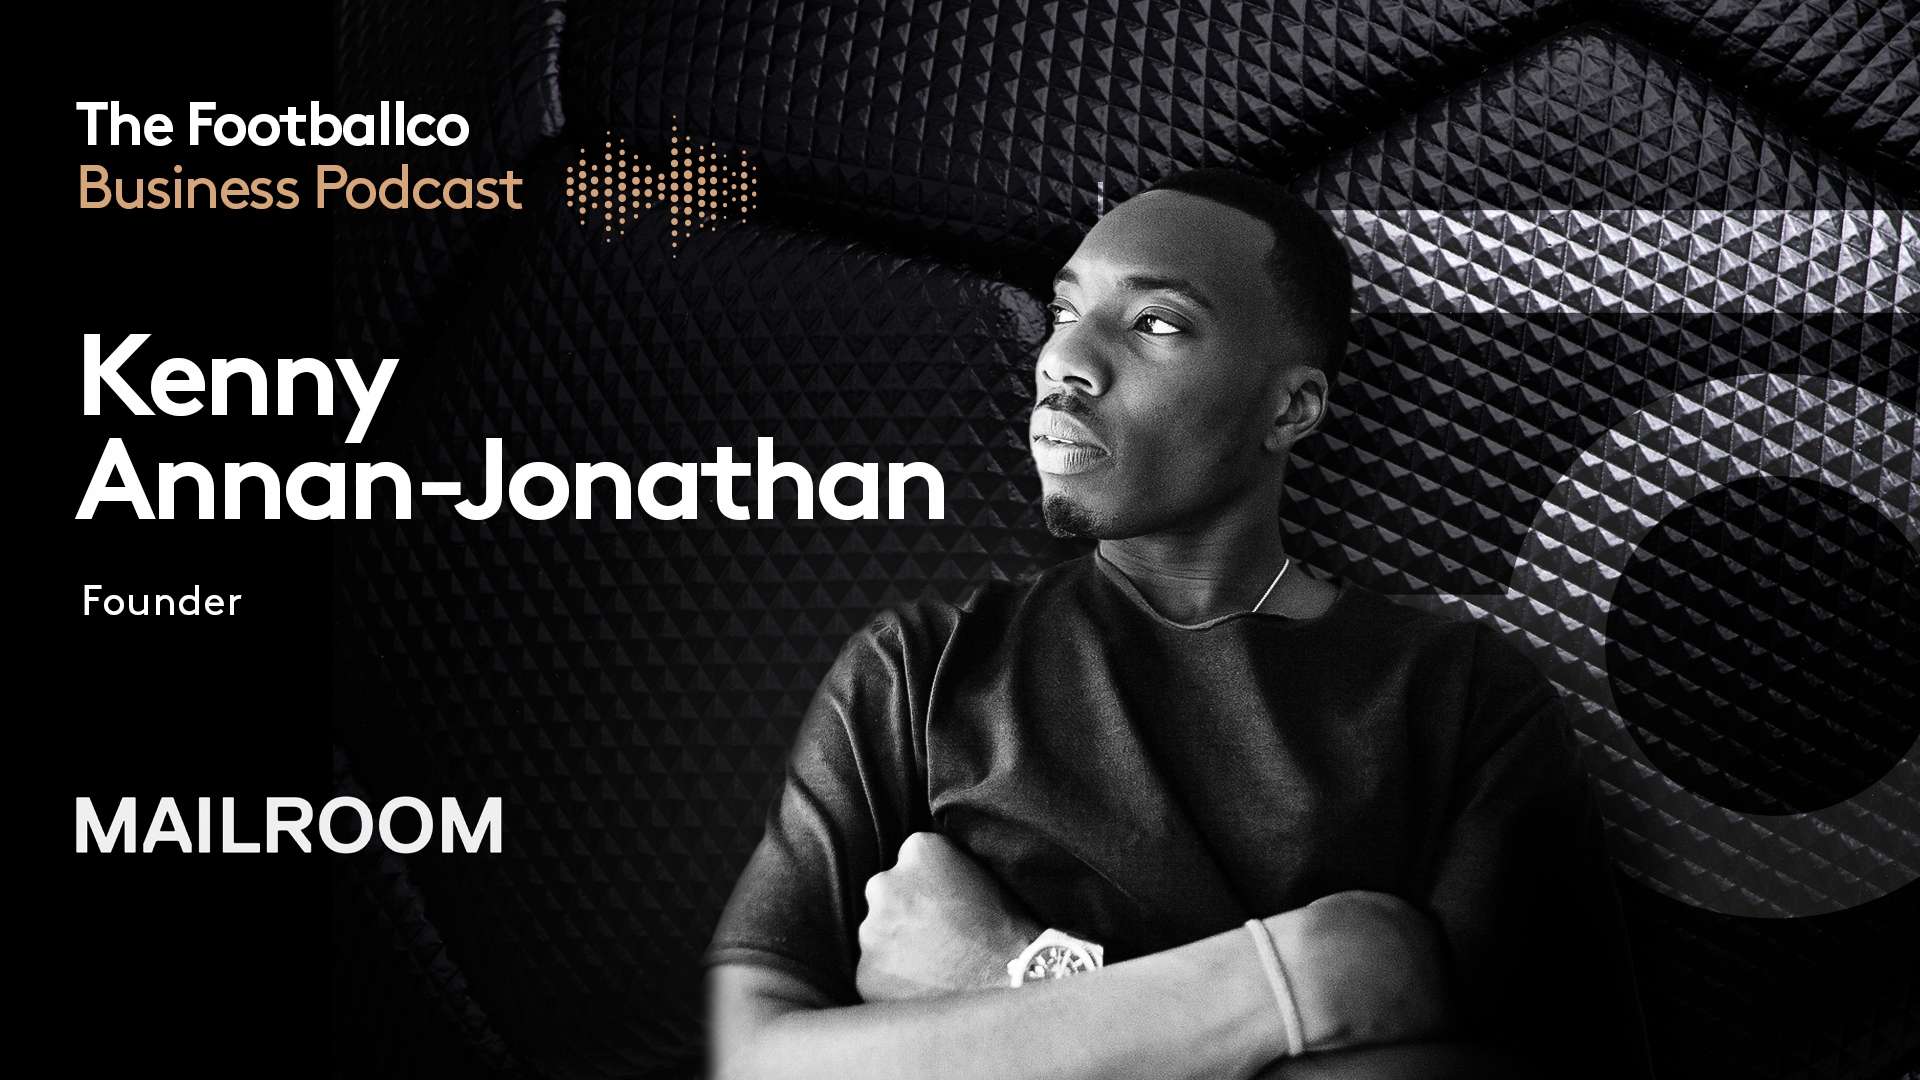 Kenny Annan-Jonathan Footballco Business podcast